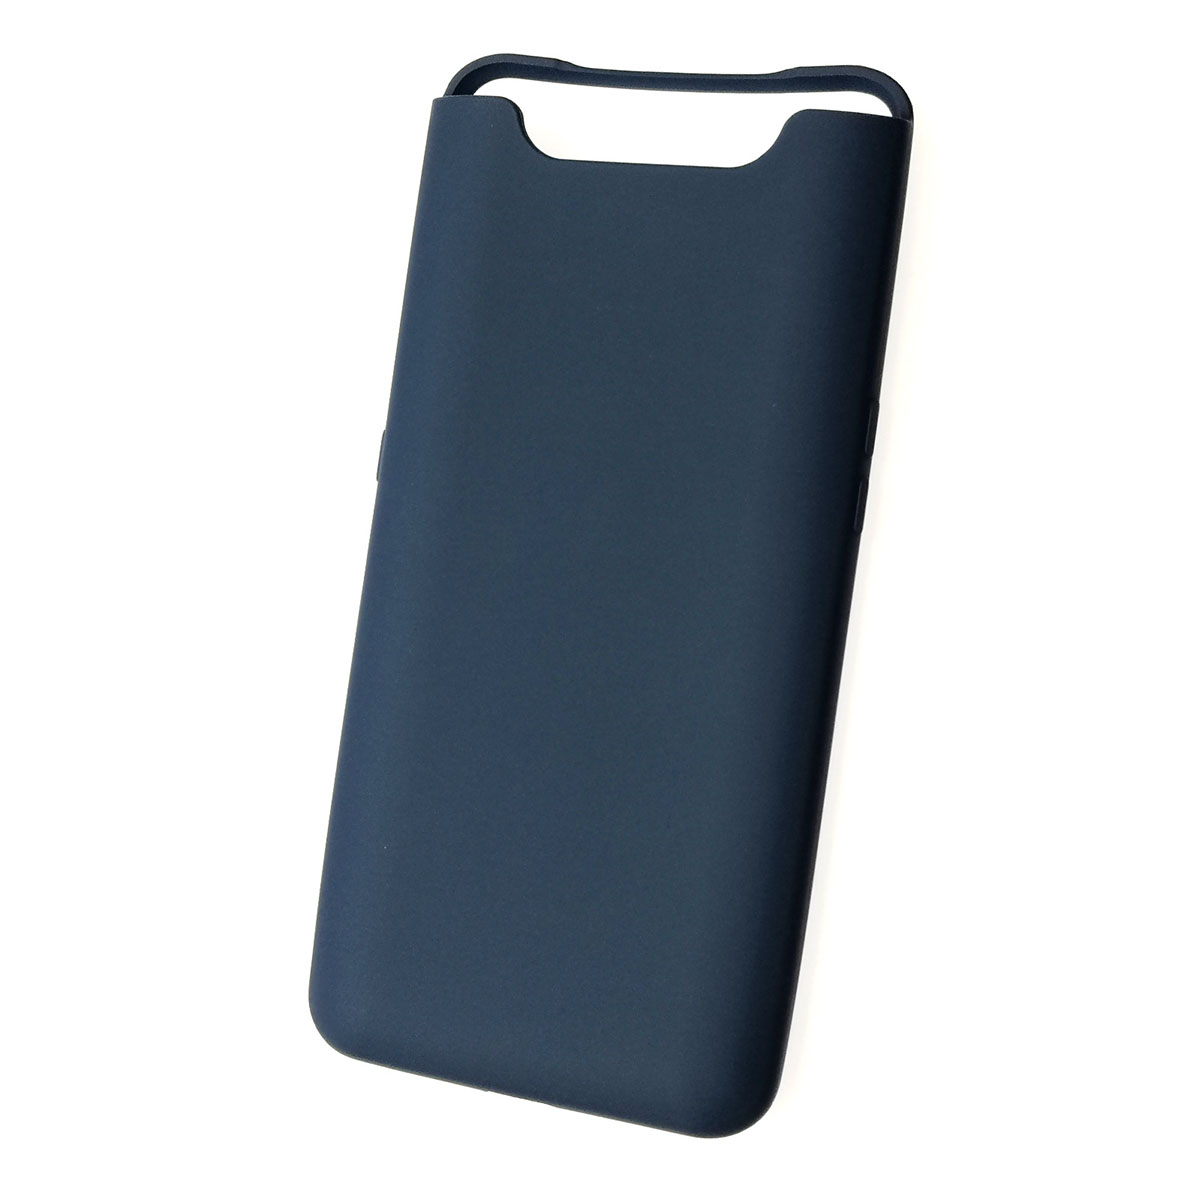 Чехол накладка Silicon Cover для Samsung A80 2019 (SM-A805), силикон, бархат, цвет синий кобальт.